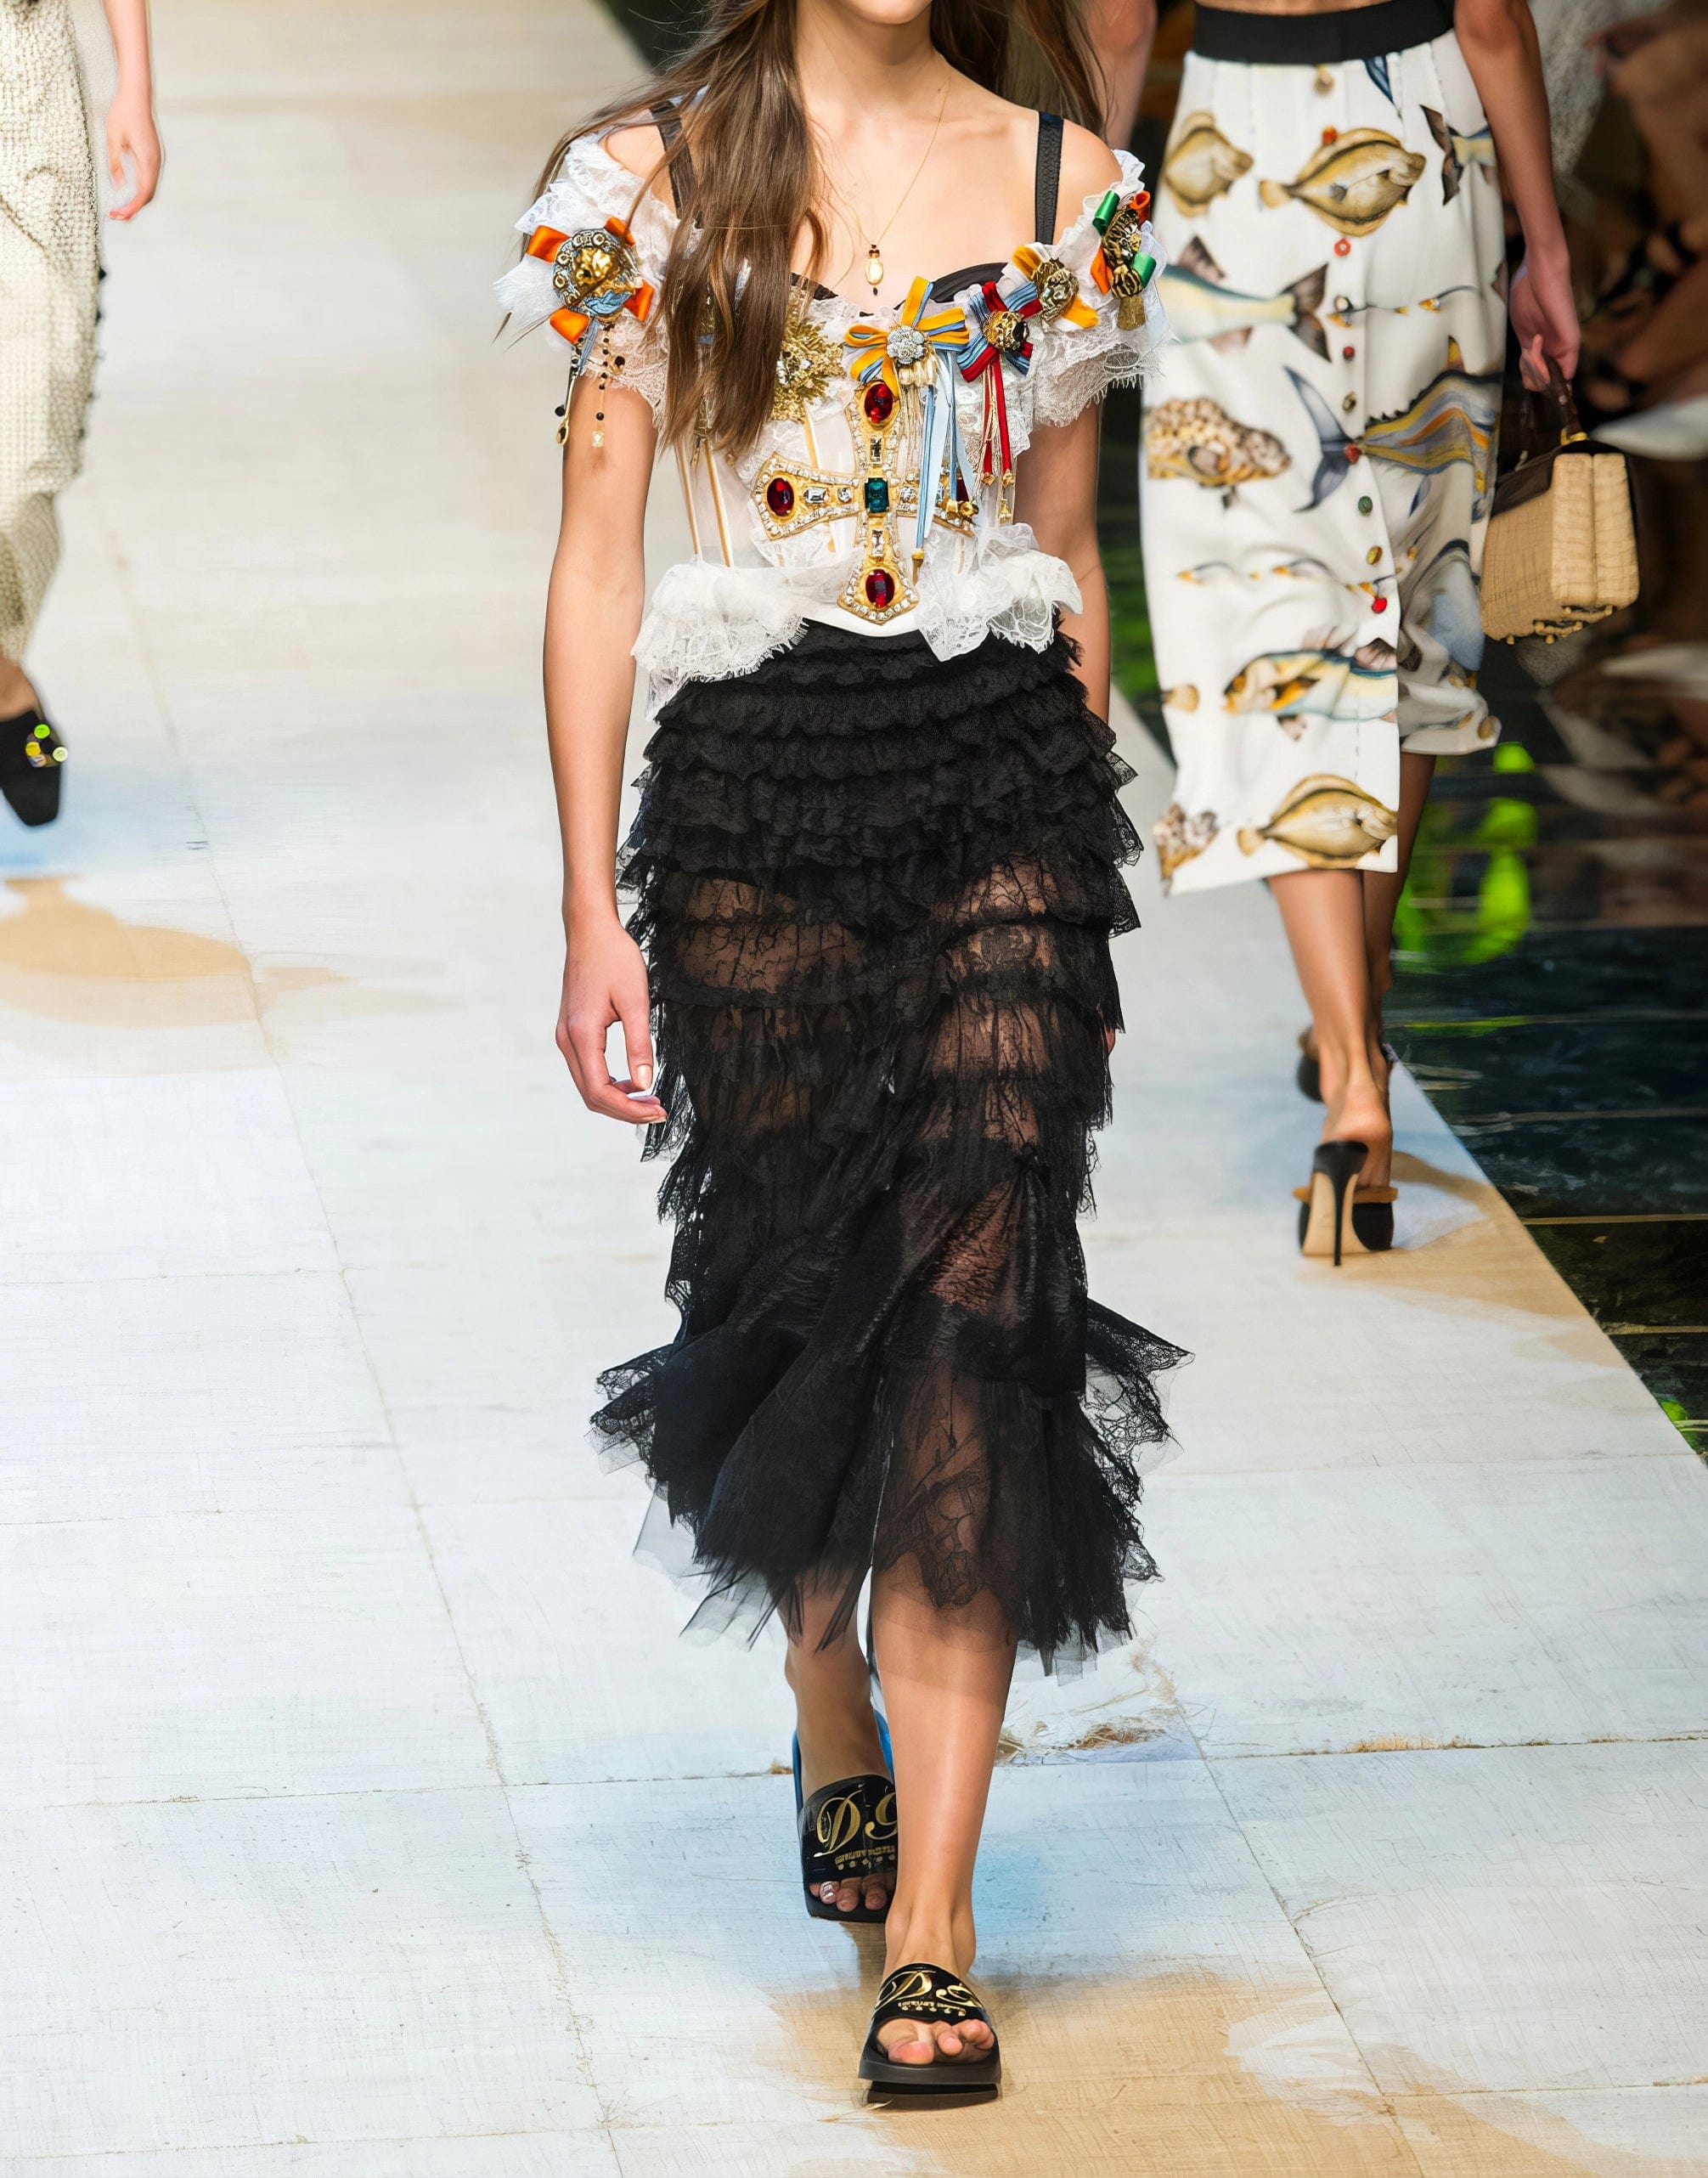 Dolce & Gabbana Beachwear Slide With Embroidered DG